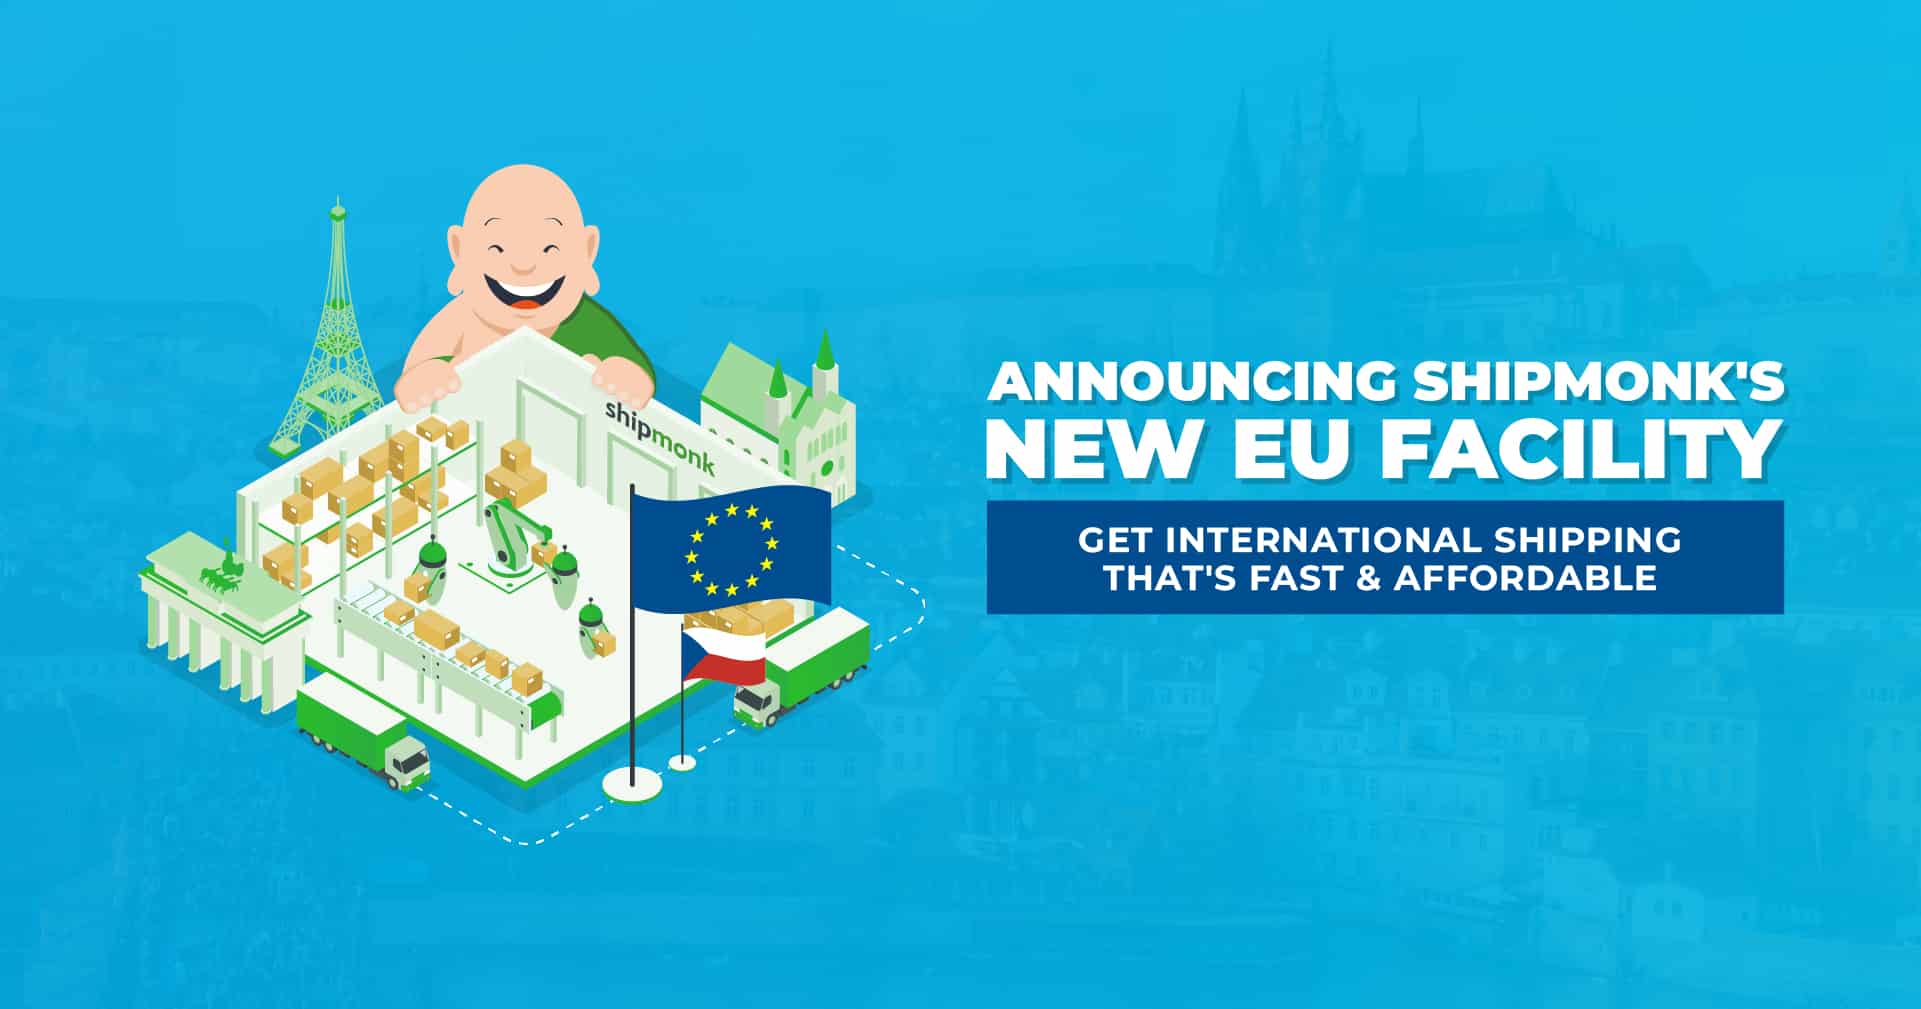 Announcing New EU Facility